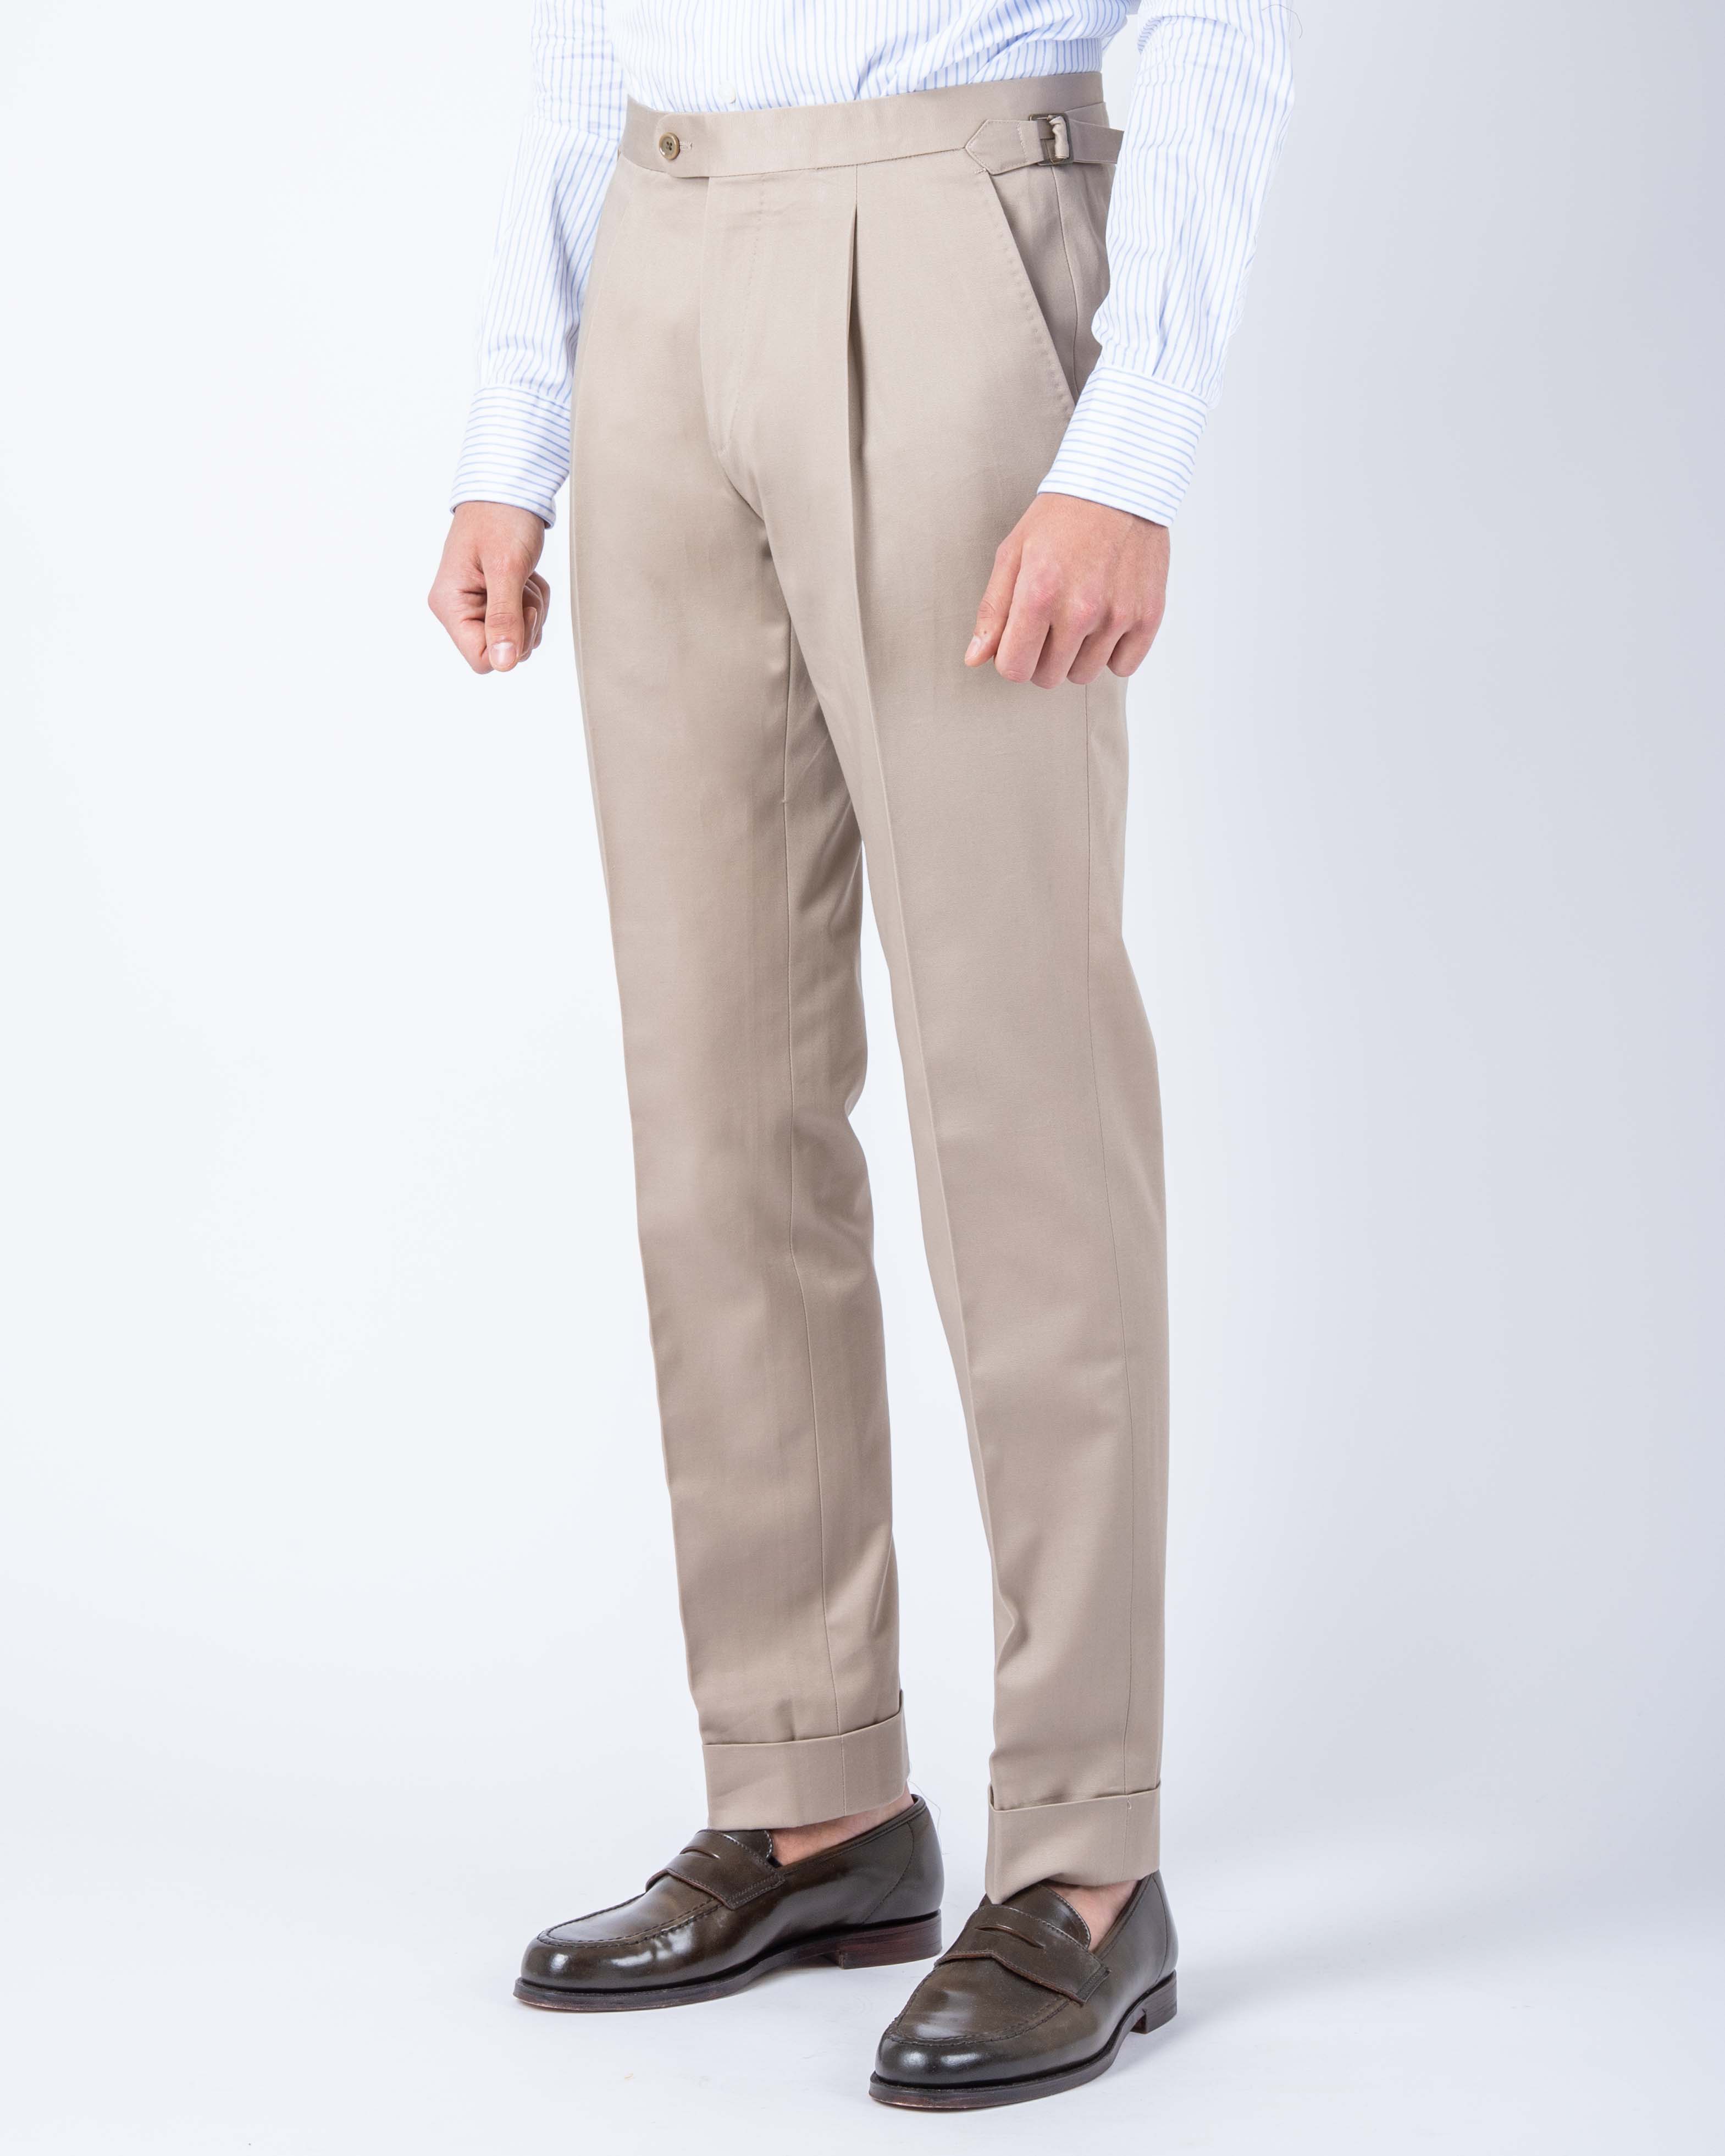 Sid Neigum Japanese Suiting Pant with Single Pleat – Des Kohan